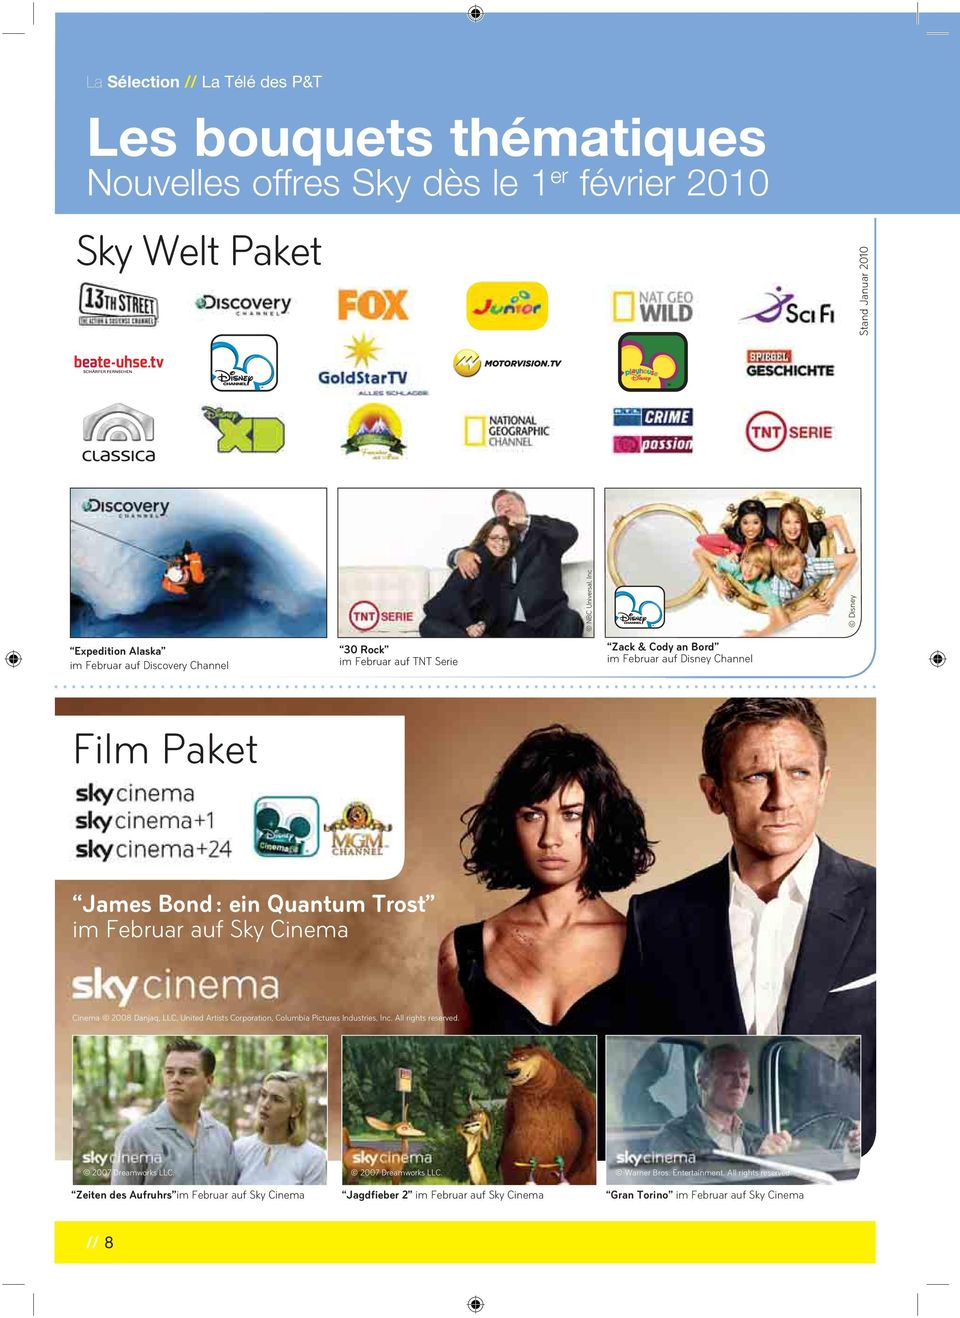 Februar auf Sky Cinema Cinema 2008 Danjaq, LLC, United Artists Corporation, Columbia Pictures Industries, Inc. All rights reserved. 2007 Dreamworks LLC.